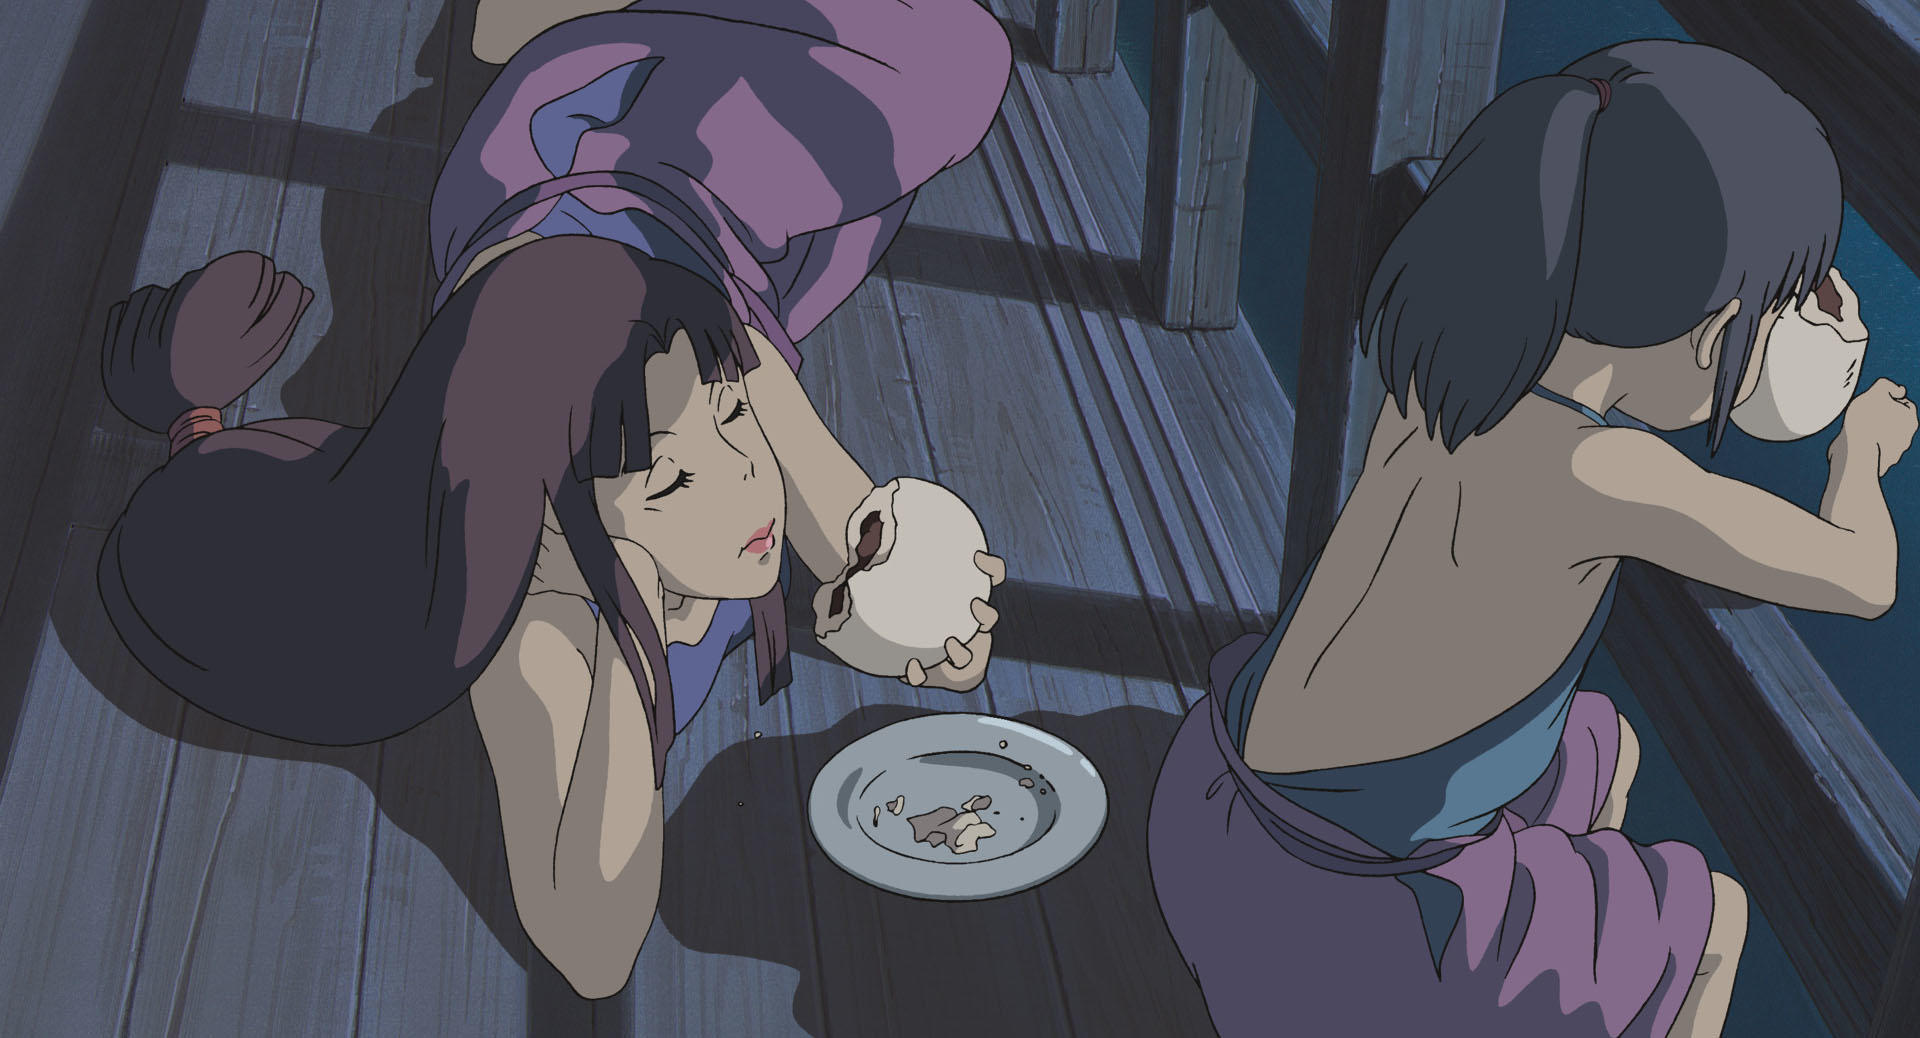 Chihiro having dinner